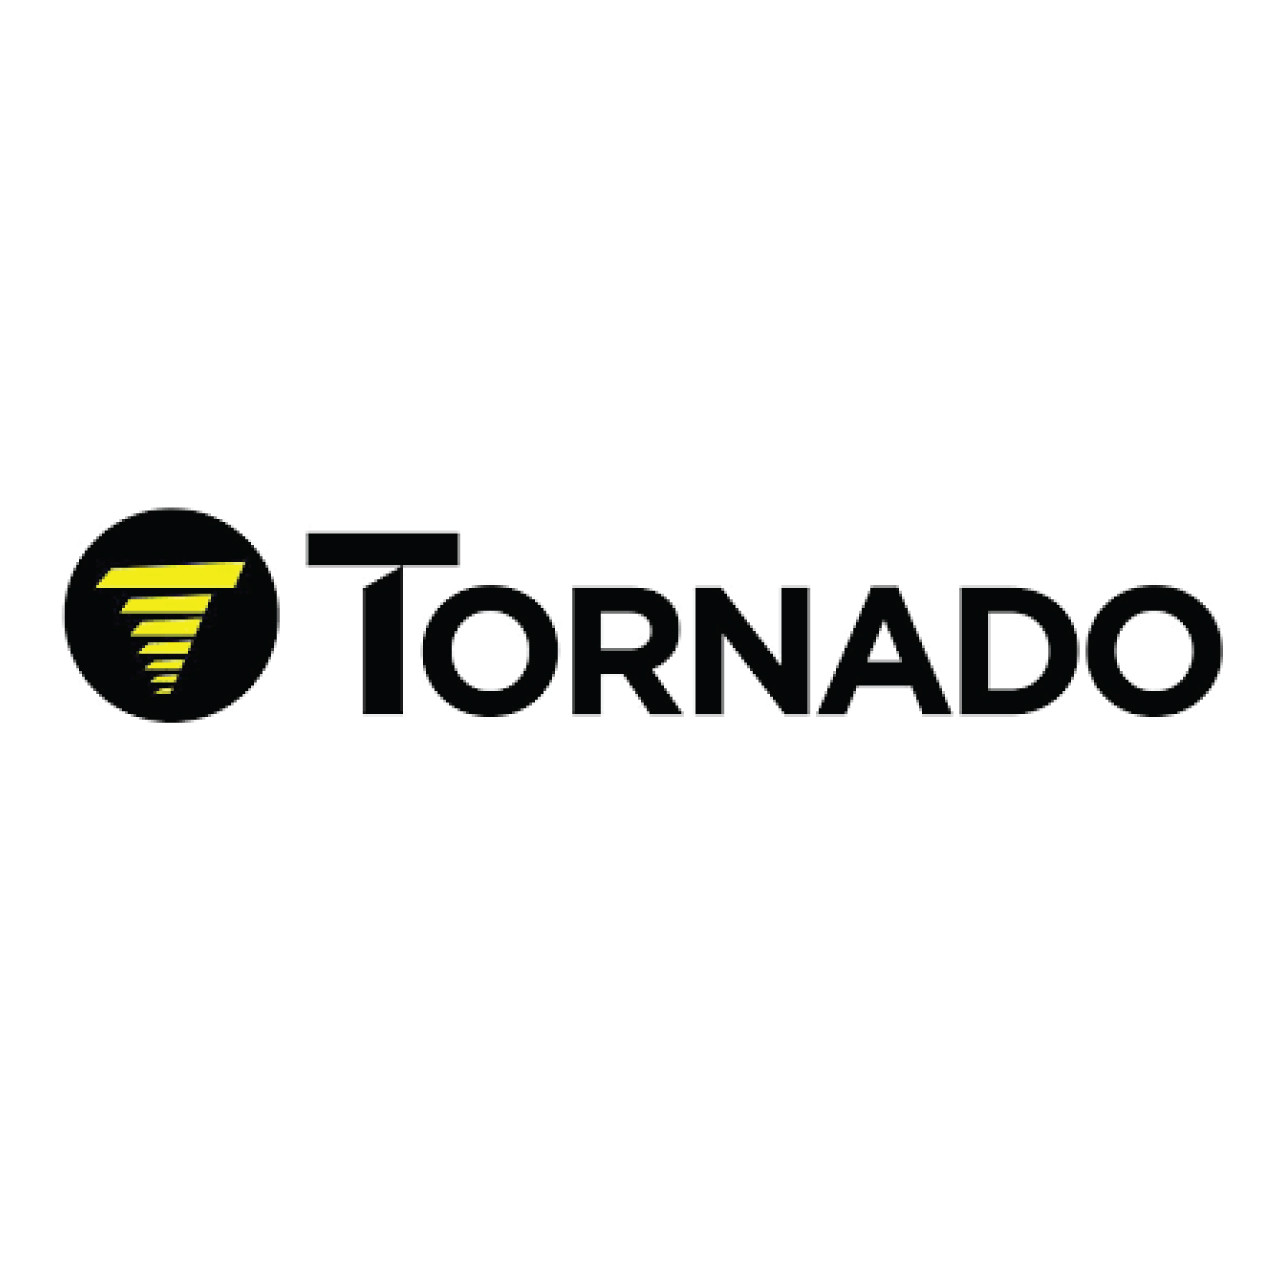 ORBHEAD, Tornado ORBHEAD, Tornado orbital head assembly, Tornado parts